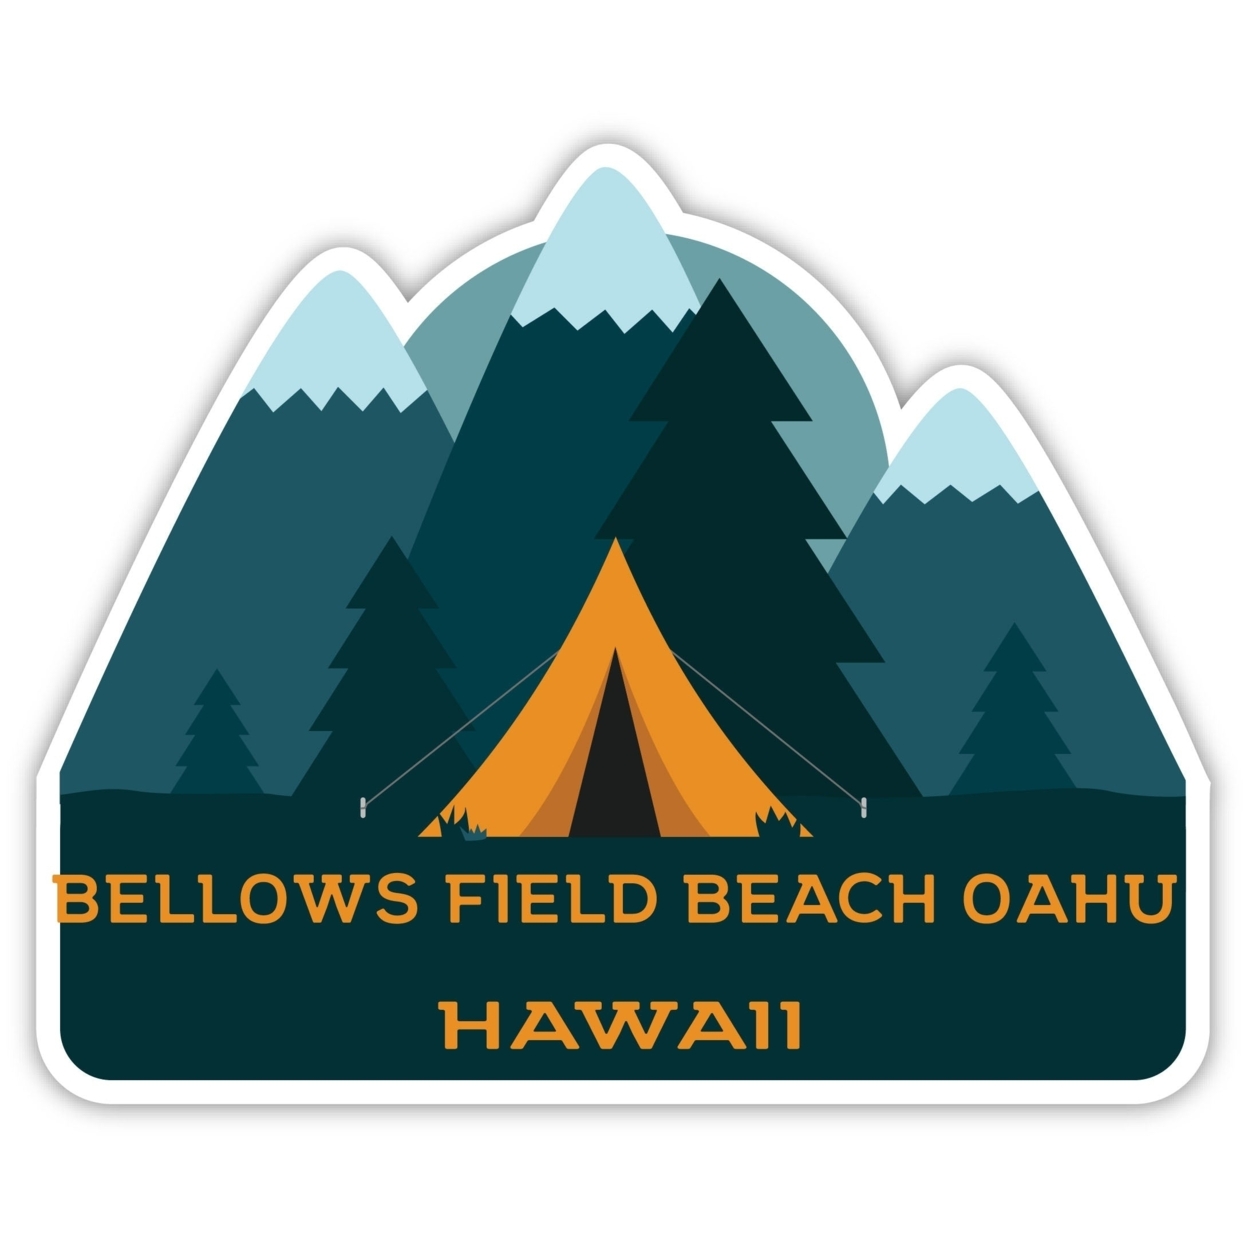 Bellows Field Beach Oahu Hawaii Souvenir Decorative Stickers (Choose Theme And Size) - Single Unit, 8-Inch, Tent